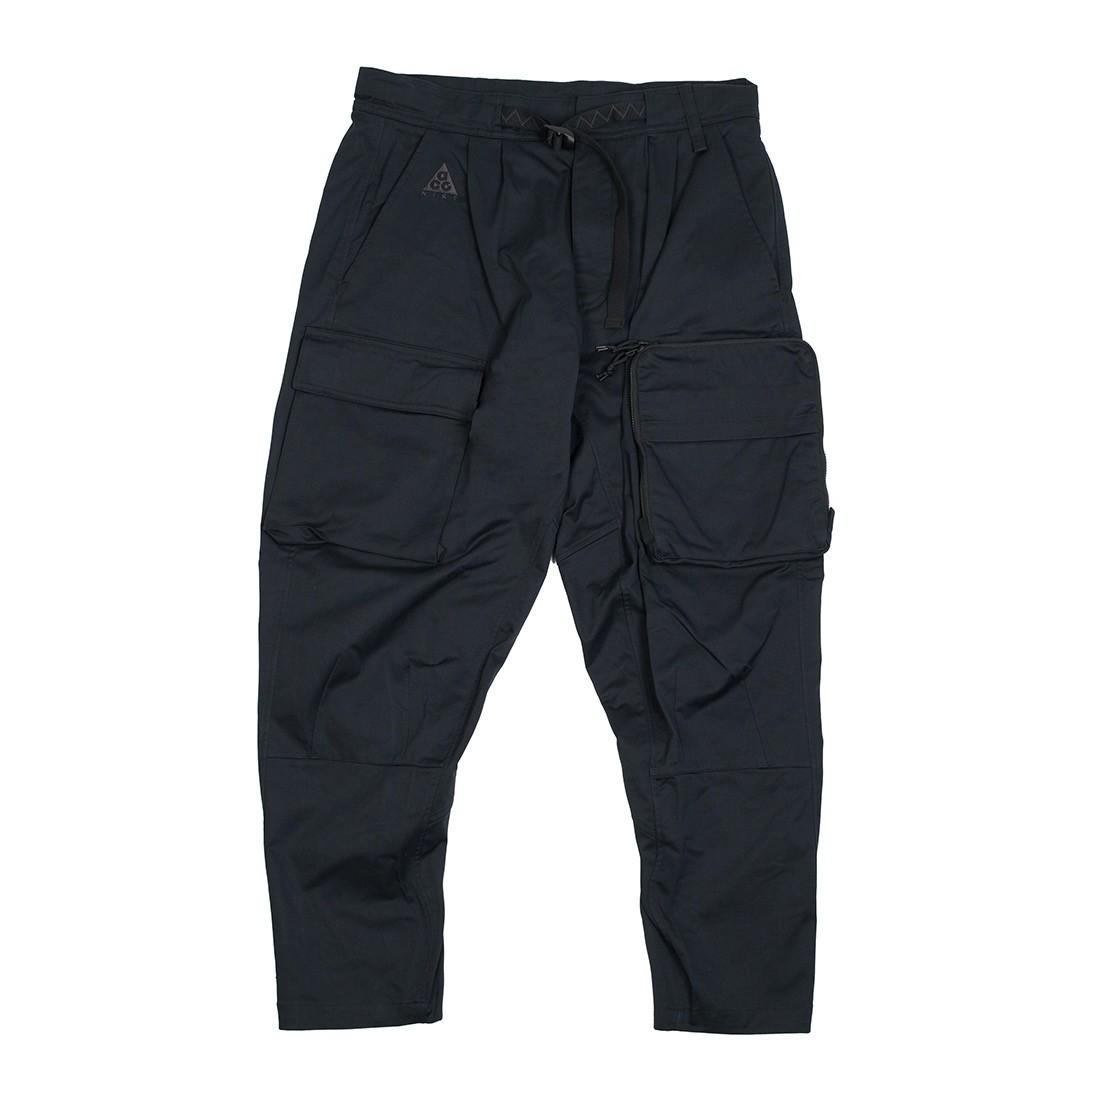 Mens Black Cargo Trousers Fashion Drawstring Hip Hop Harem Cropped Casual  Pants